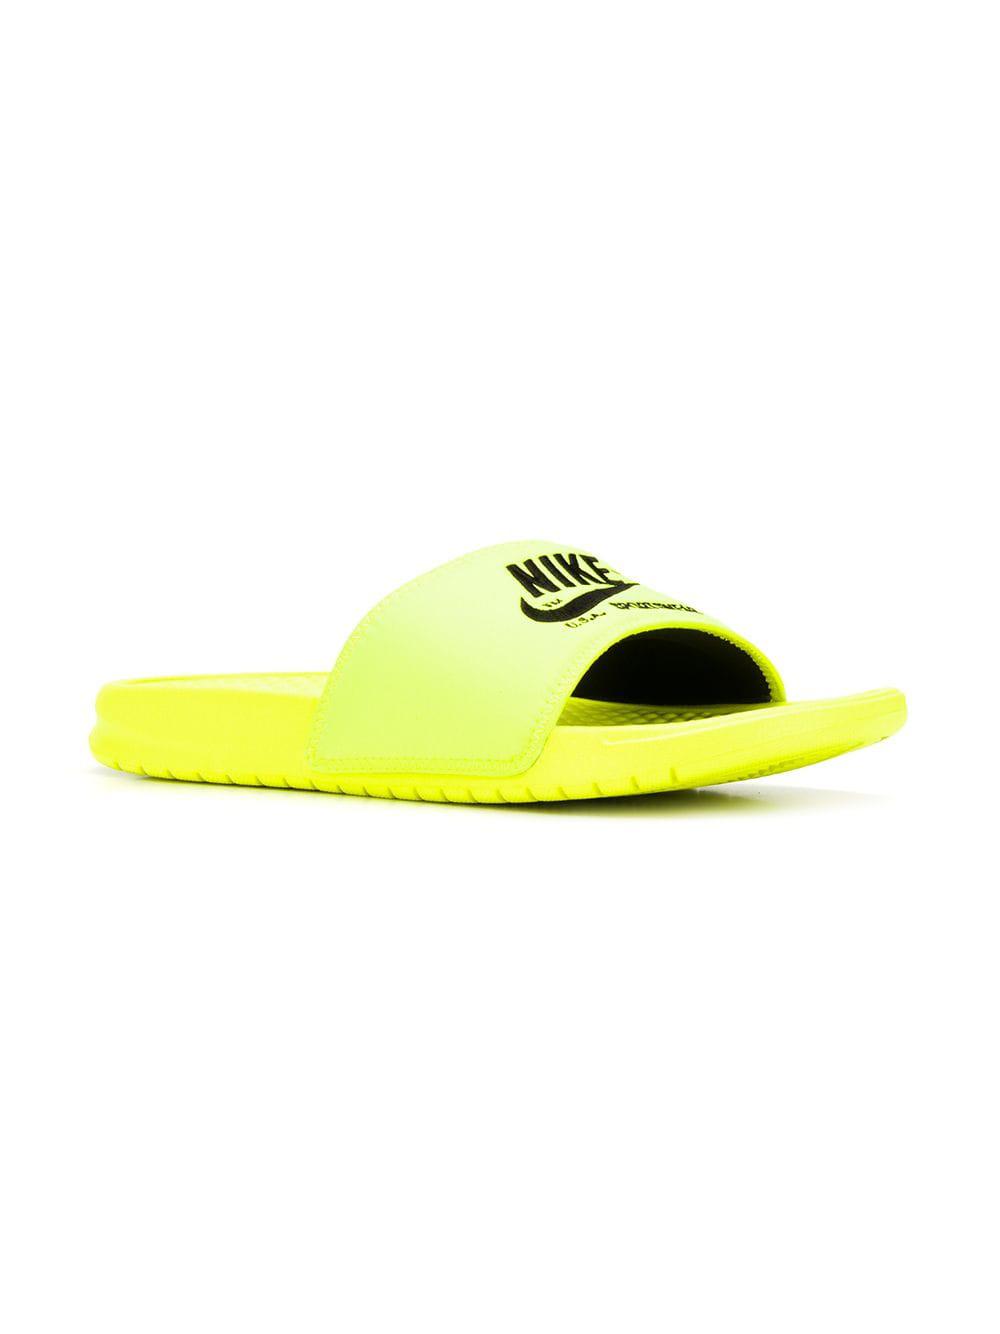 Nike Synthetic Benassi Slide Sandals in Yellow for Men - Lyst